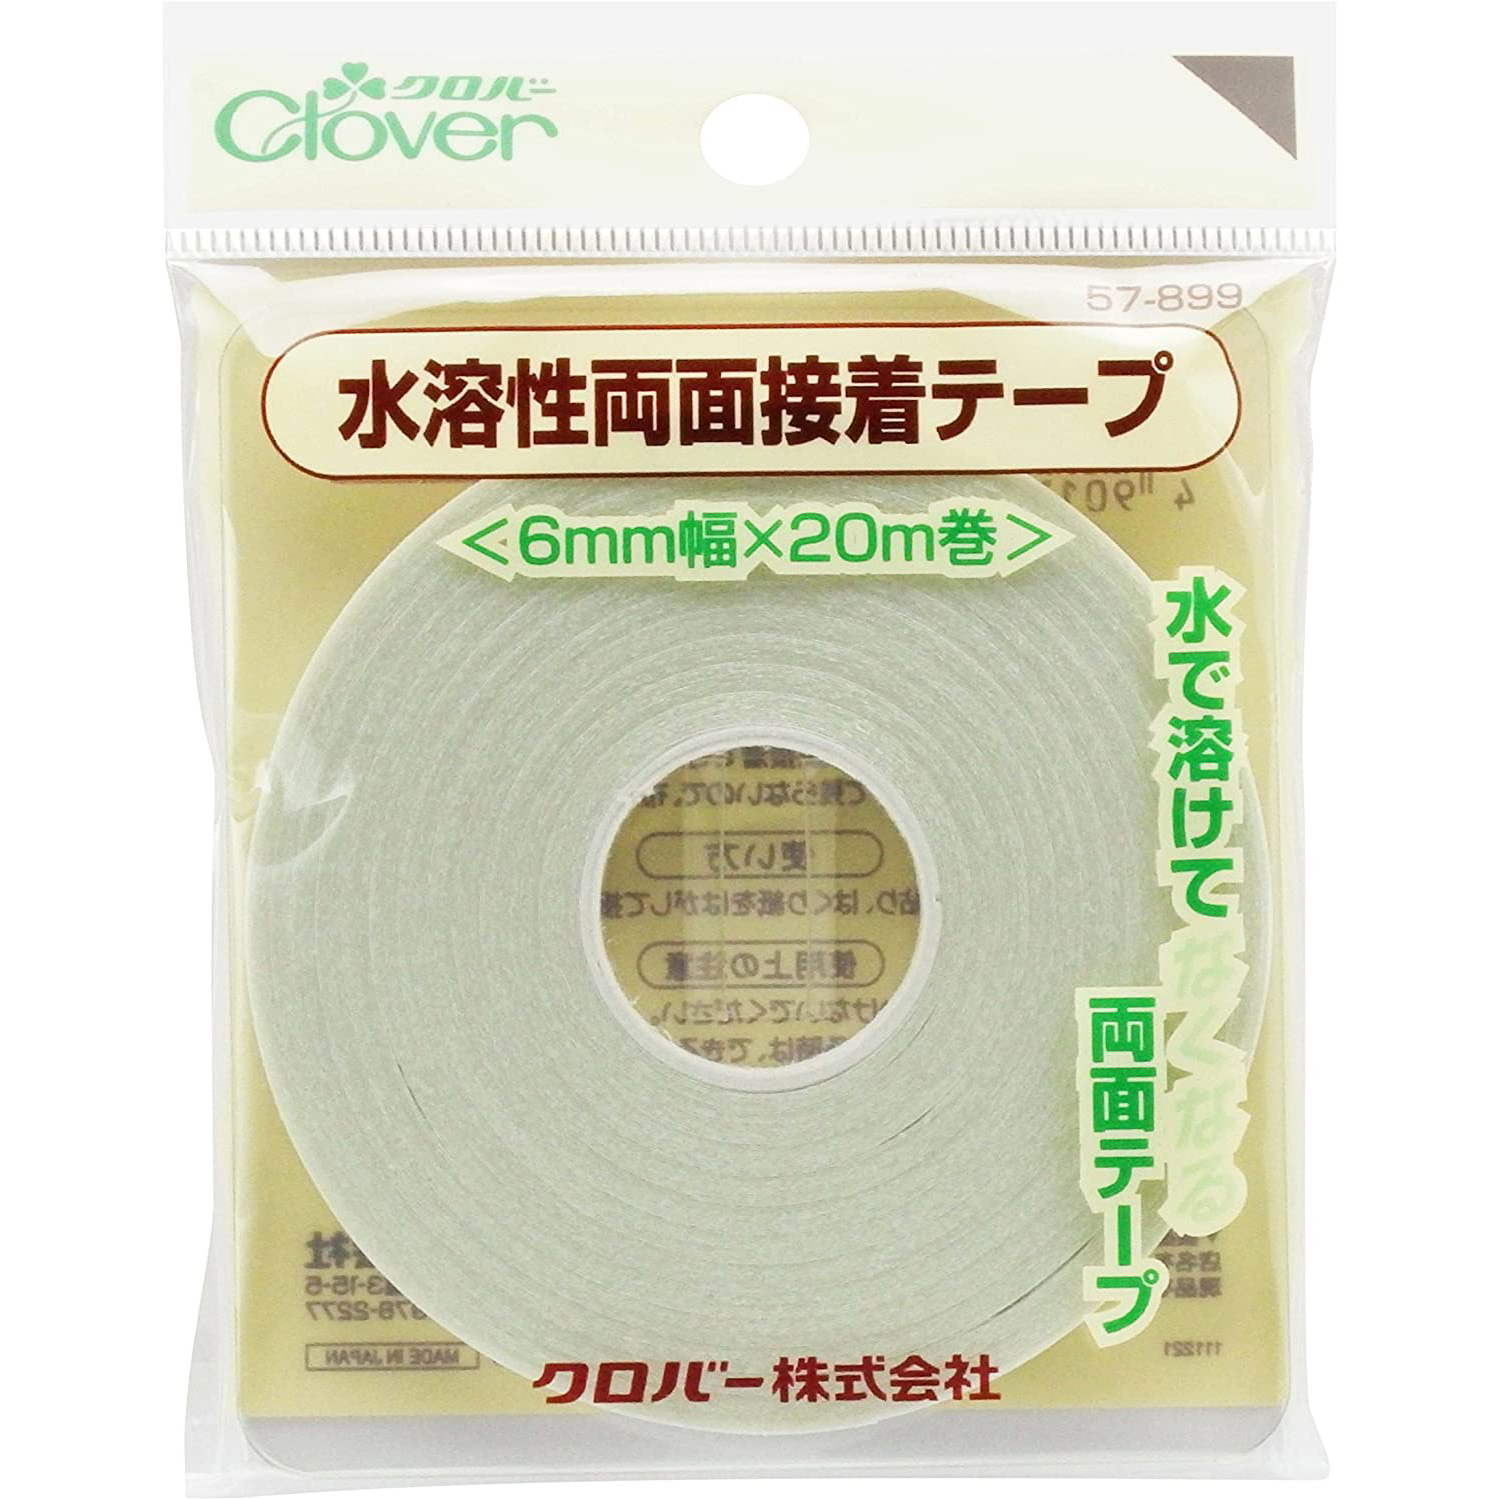 507 KAWAGUCHI 1/8 No-Sew Basting Tape 20m